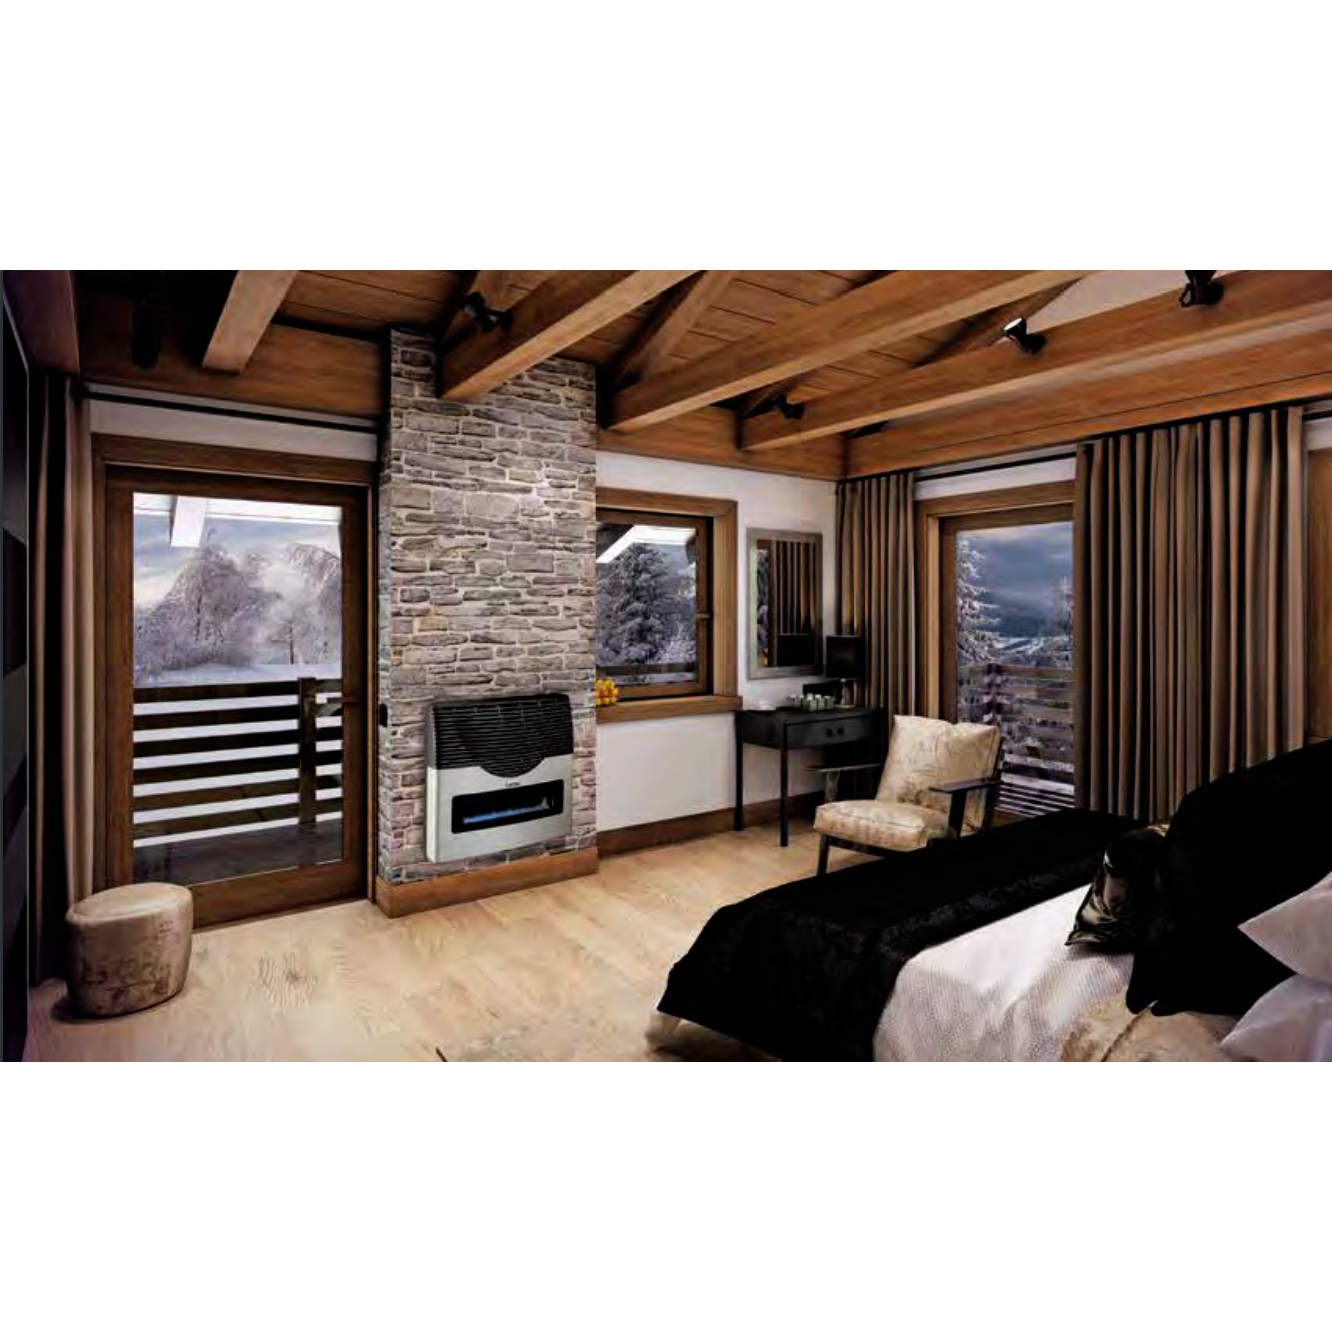 Martin Direct Vent Thermostatic Wall Mounted Heater w/window 20,000 Btu